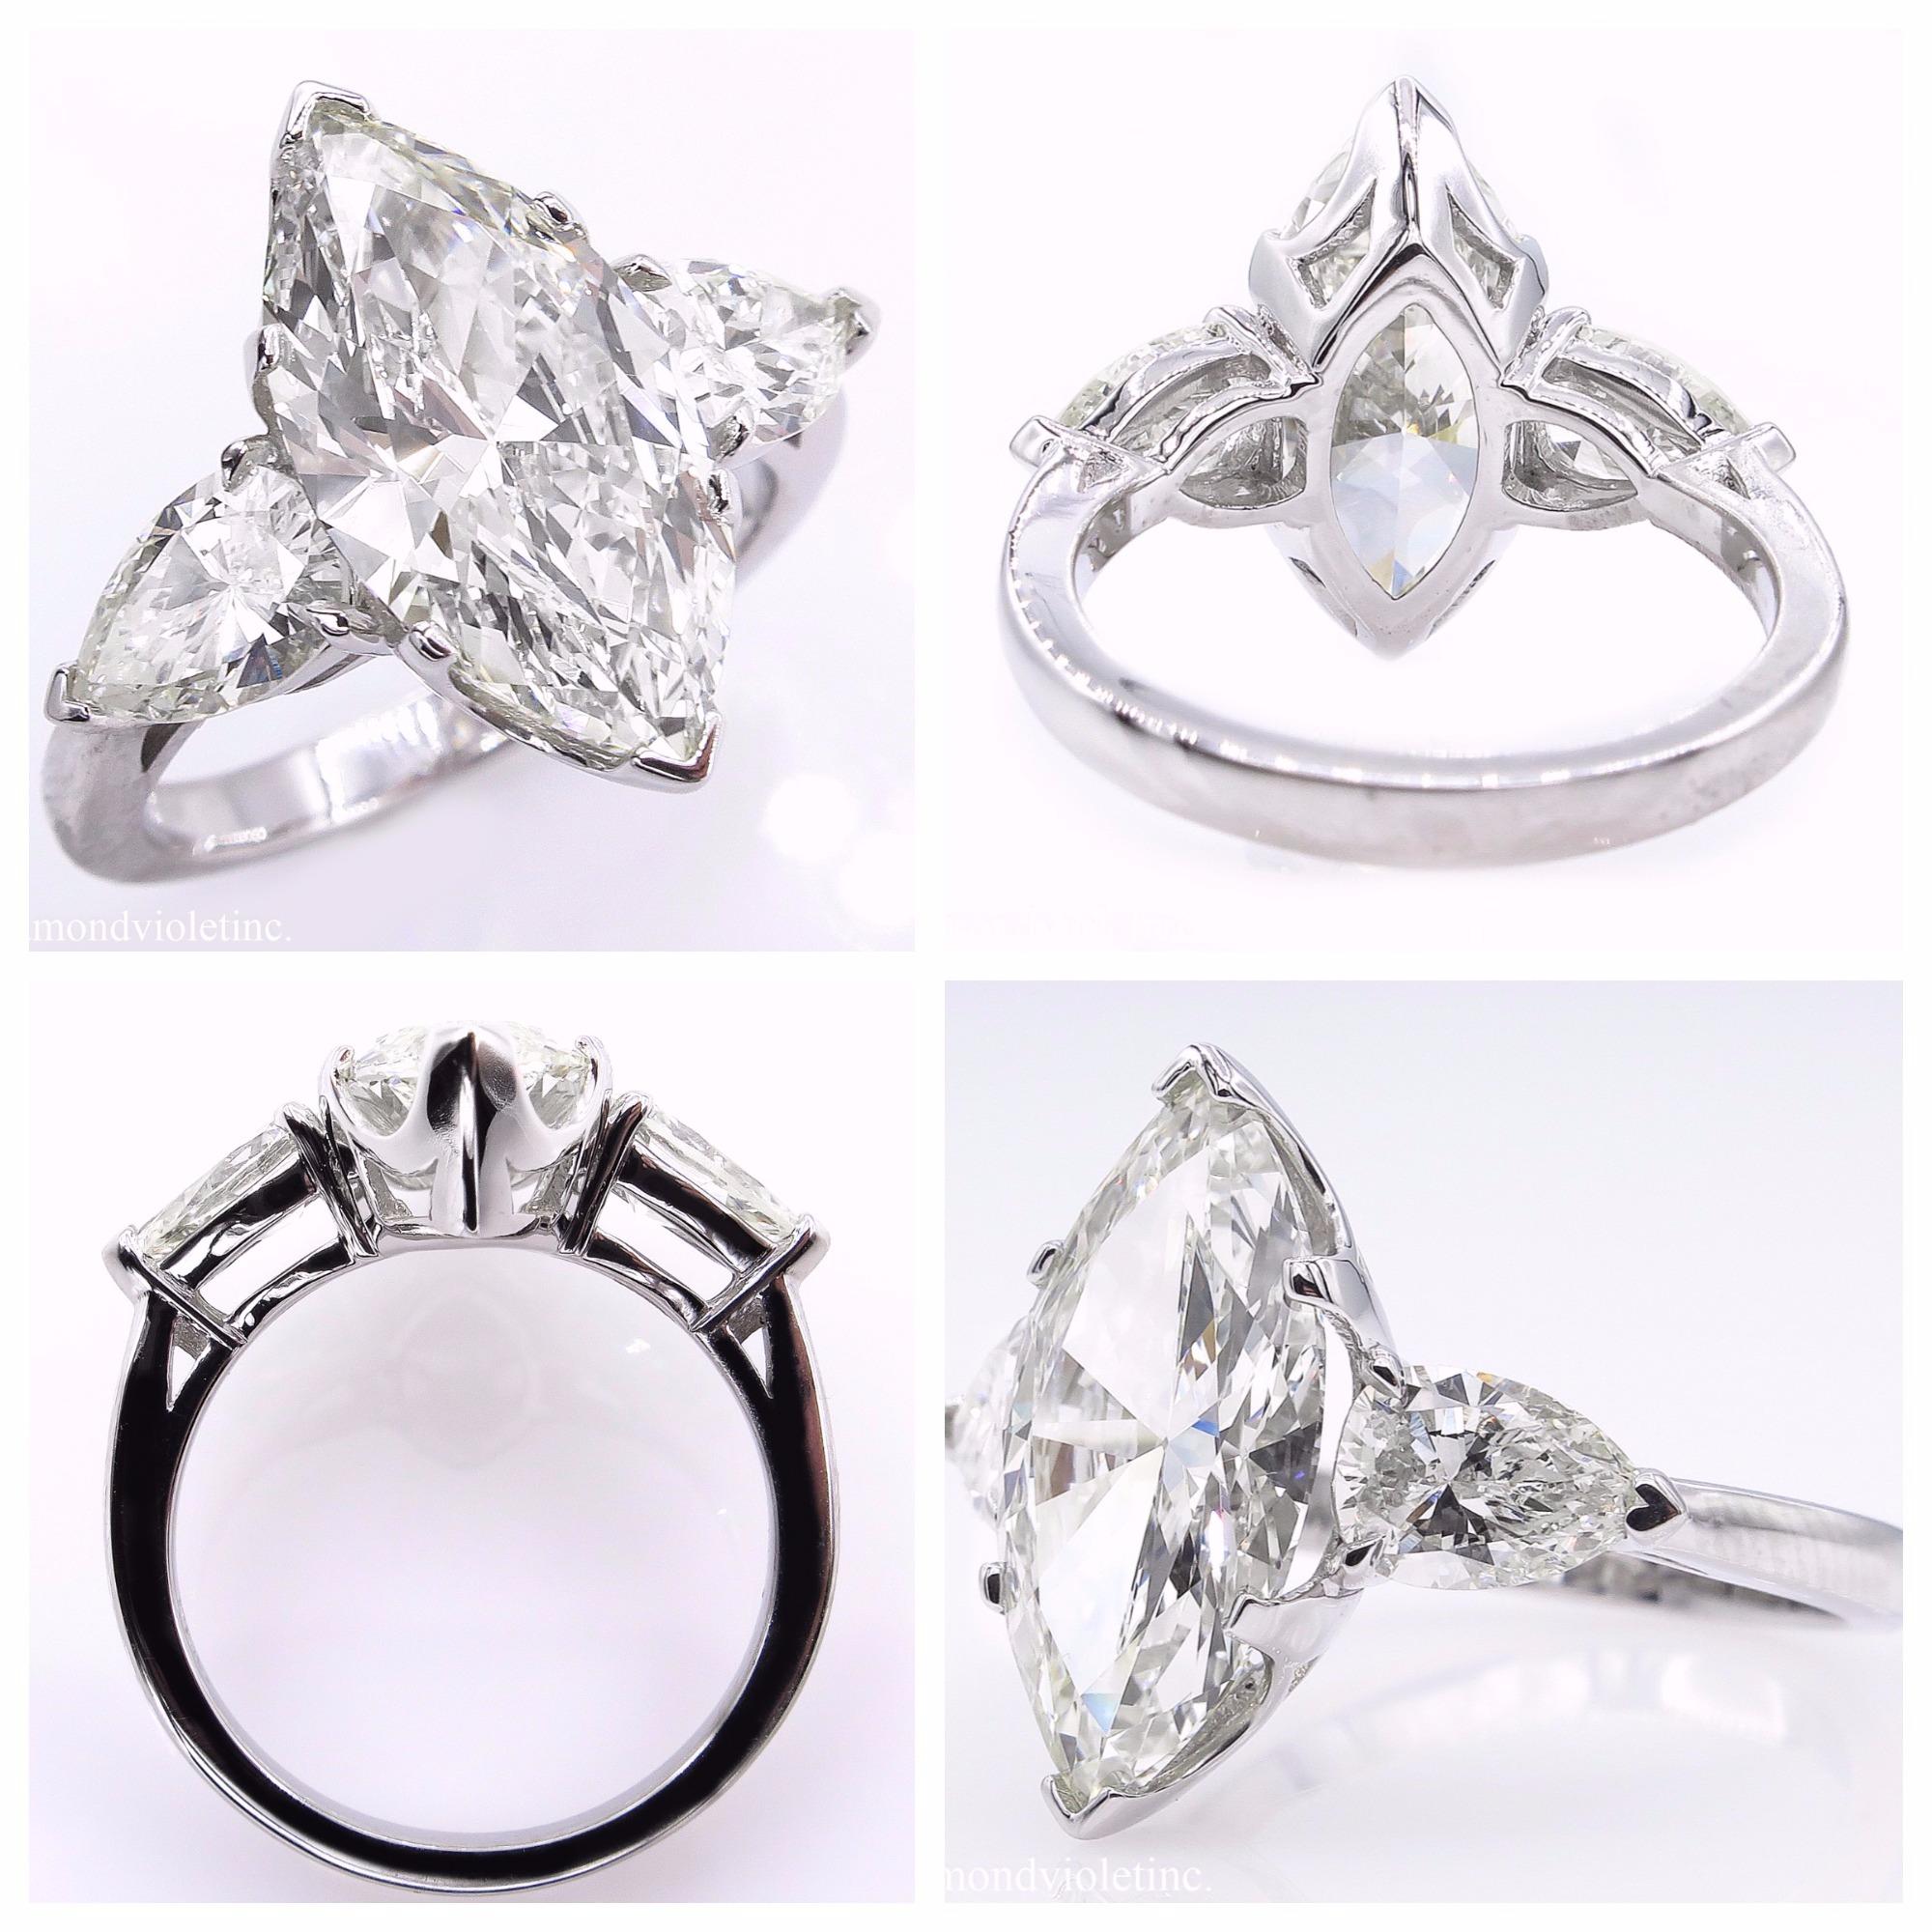 3 carat diamond marquise ring